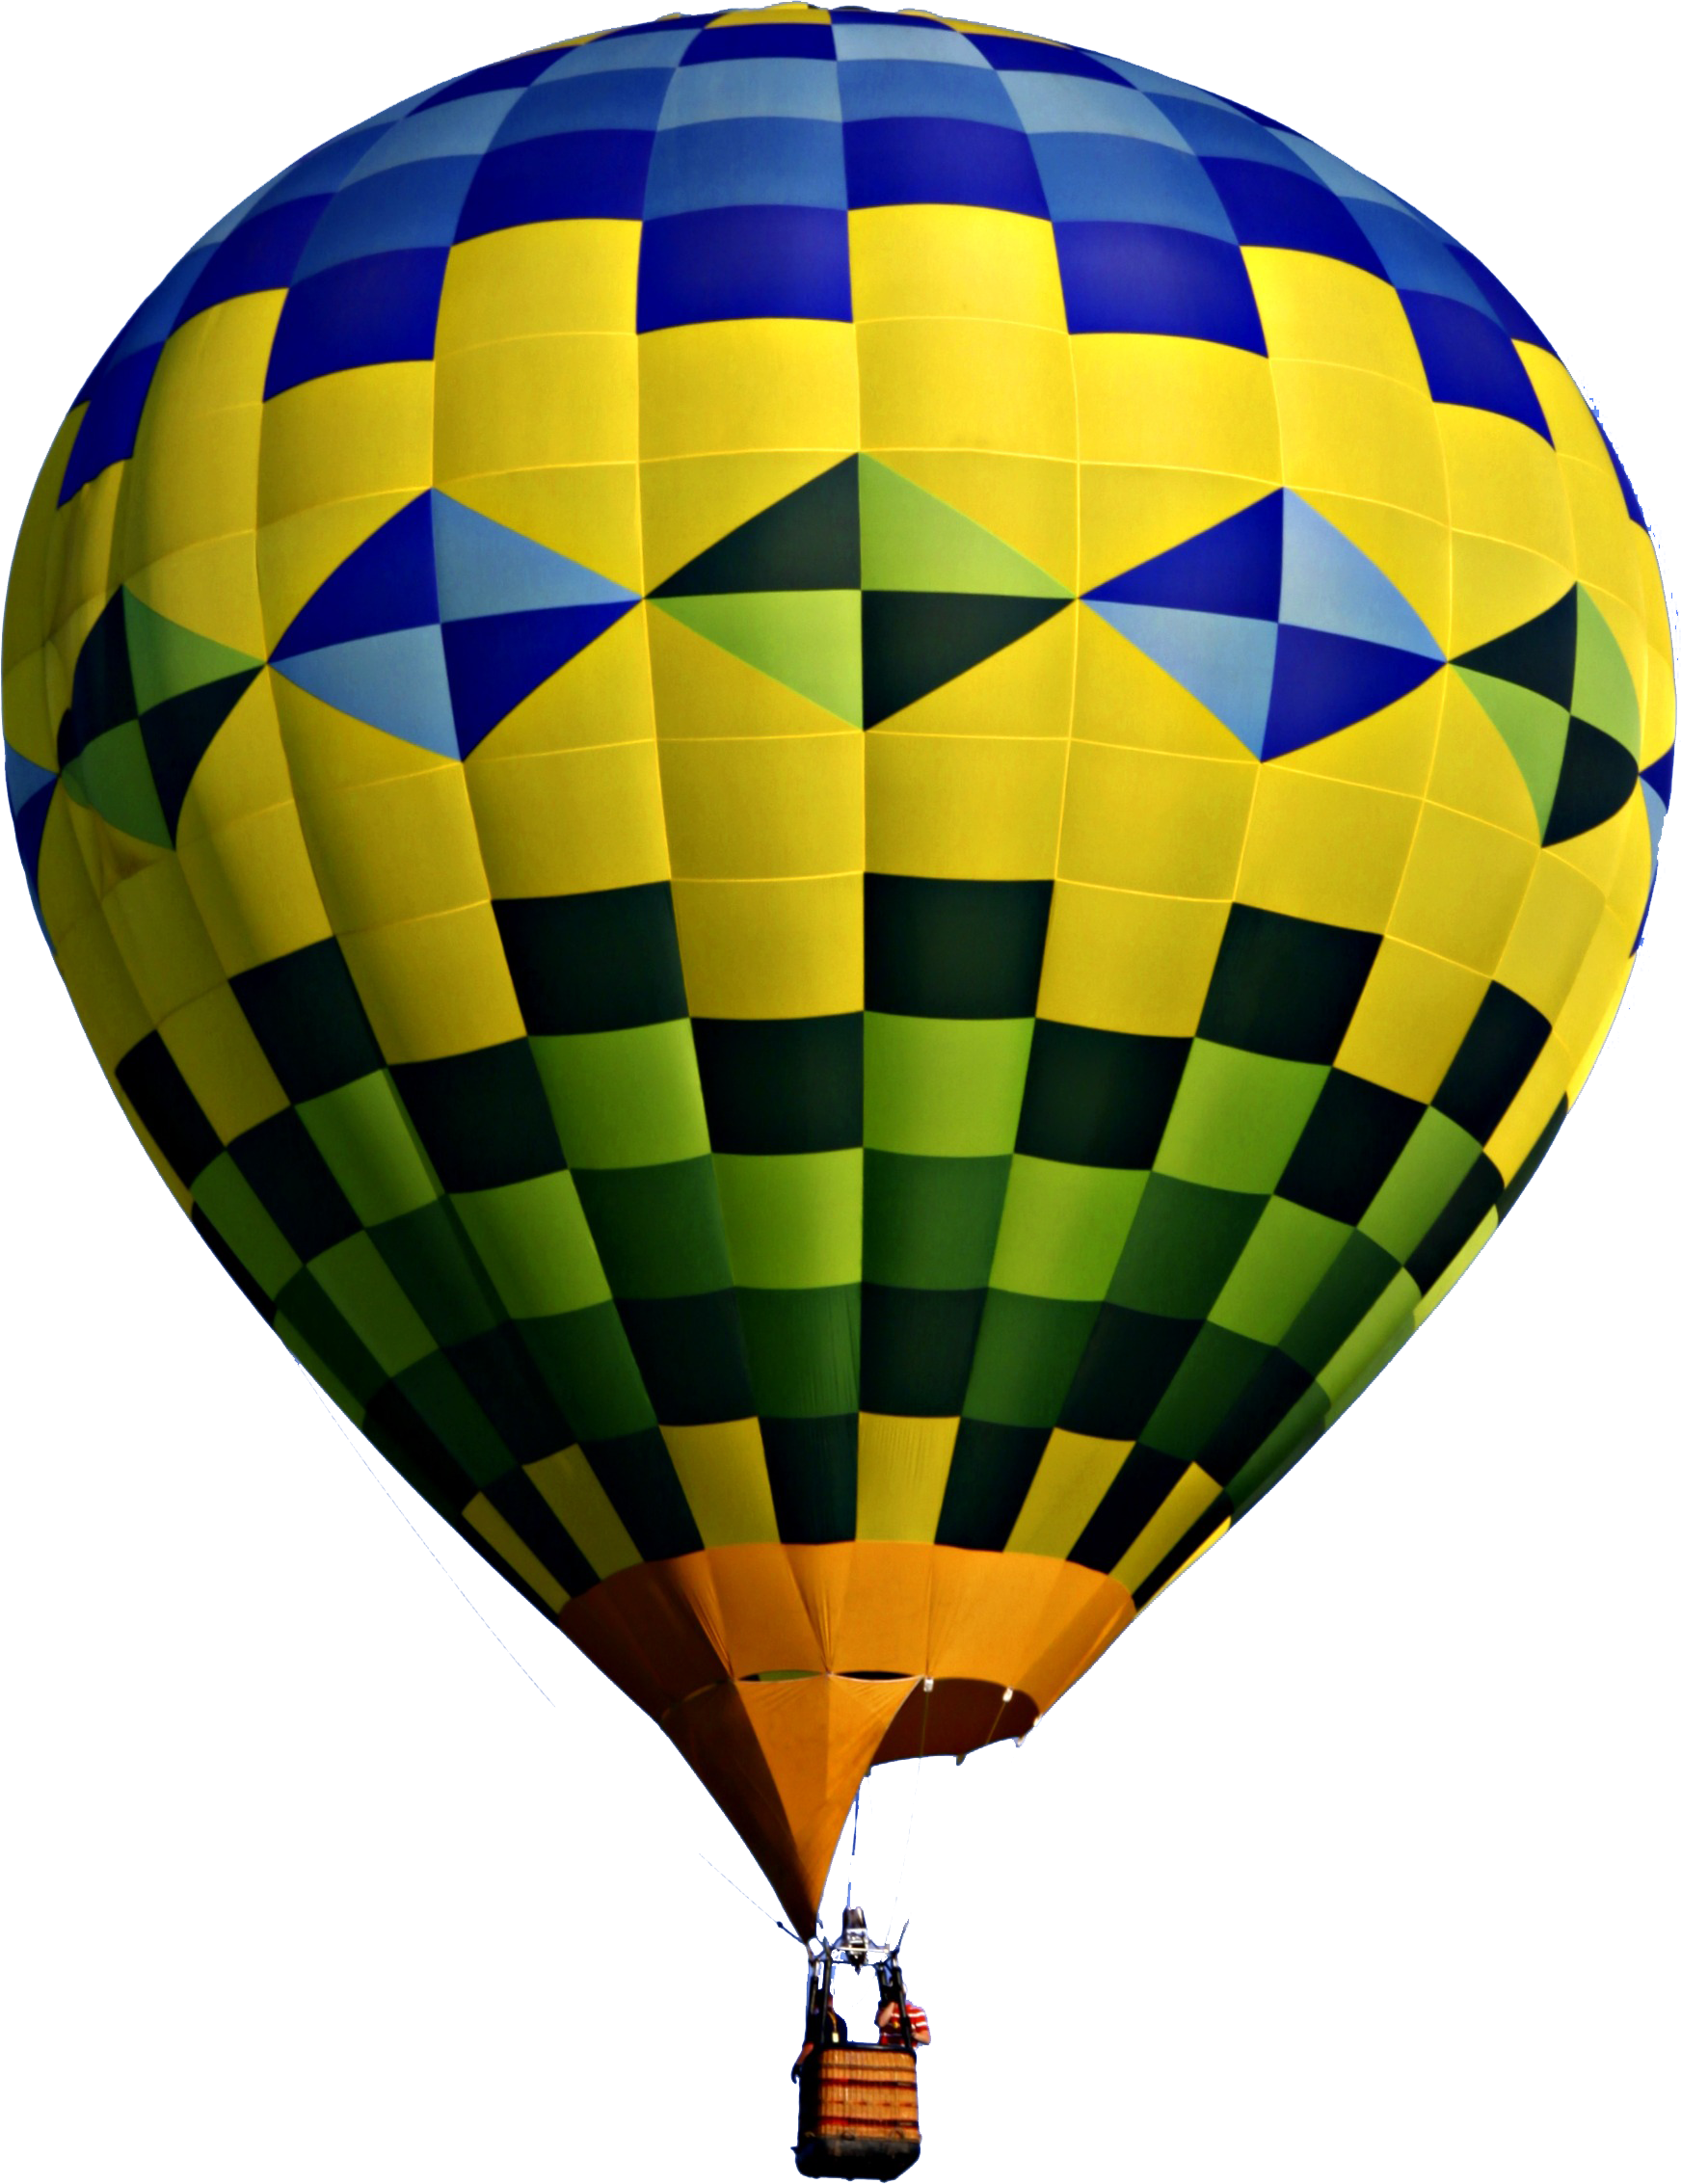 Hot Air Balloon PNG HD Quality